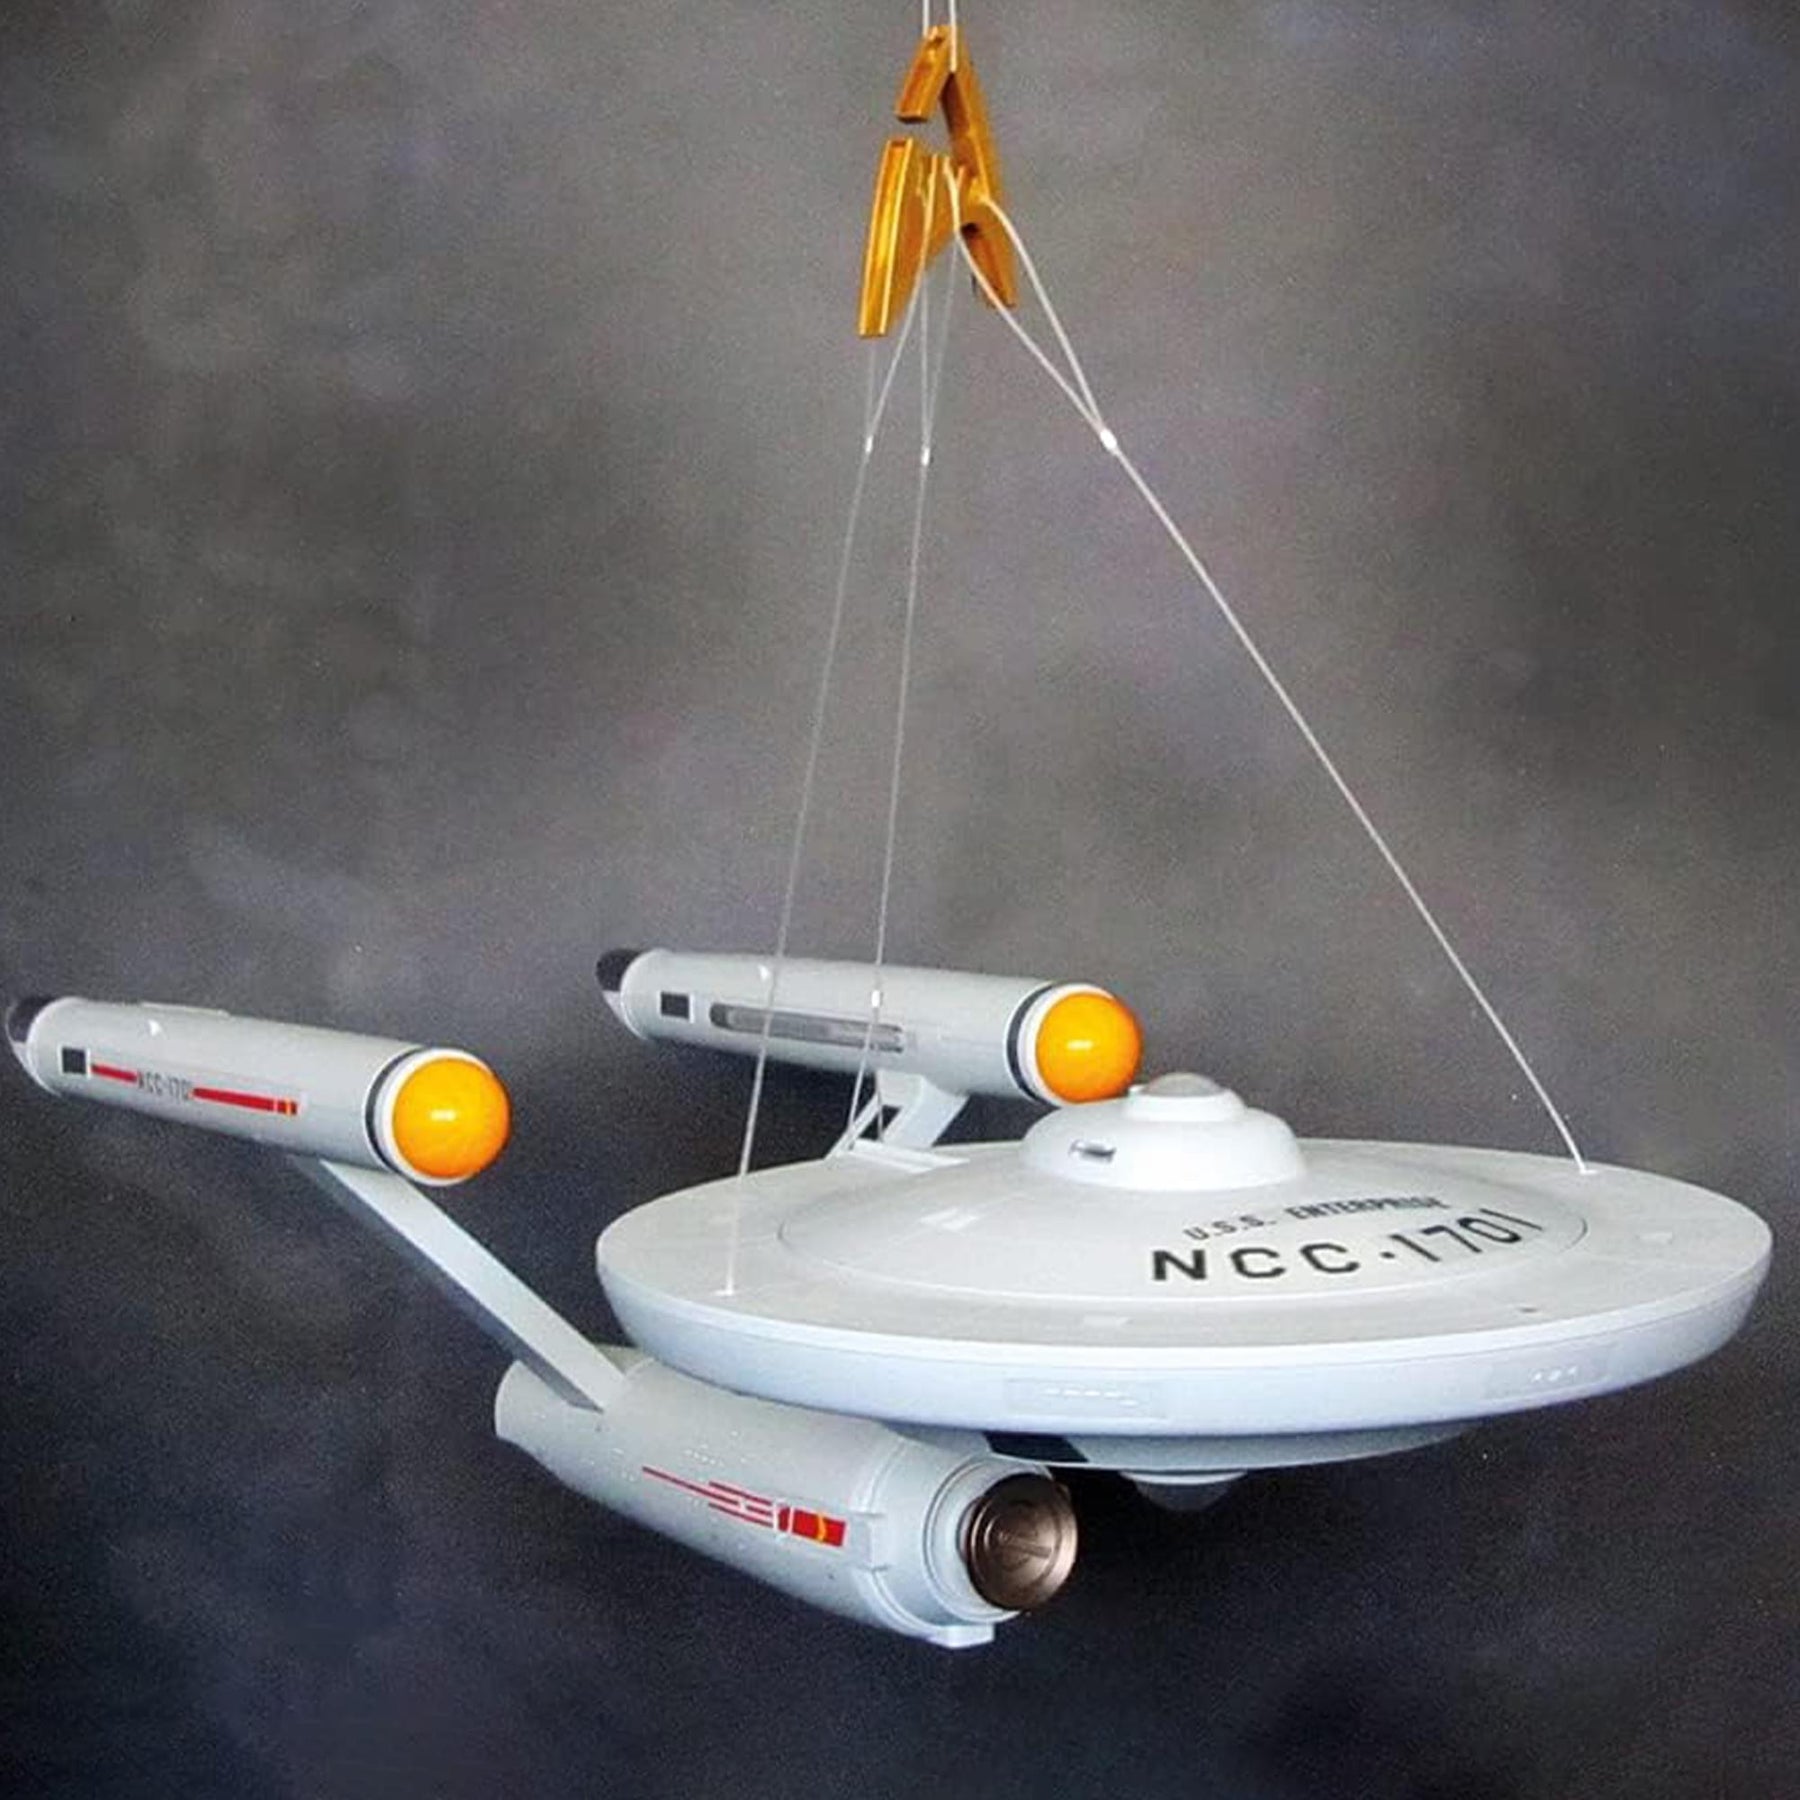 Star Trek Playmobil 70548 Enterprise NCC-1701 Building Set